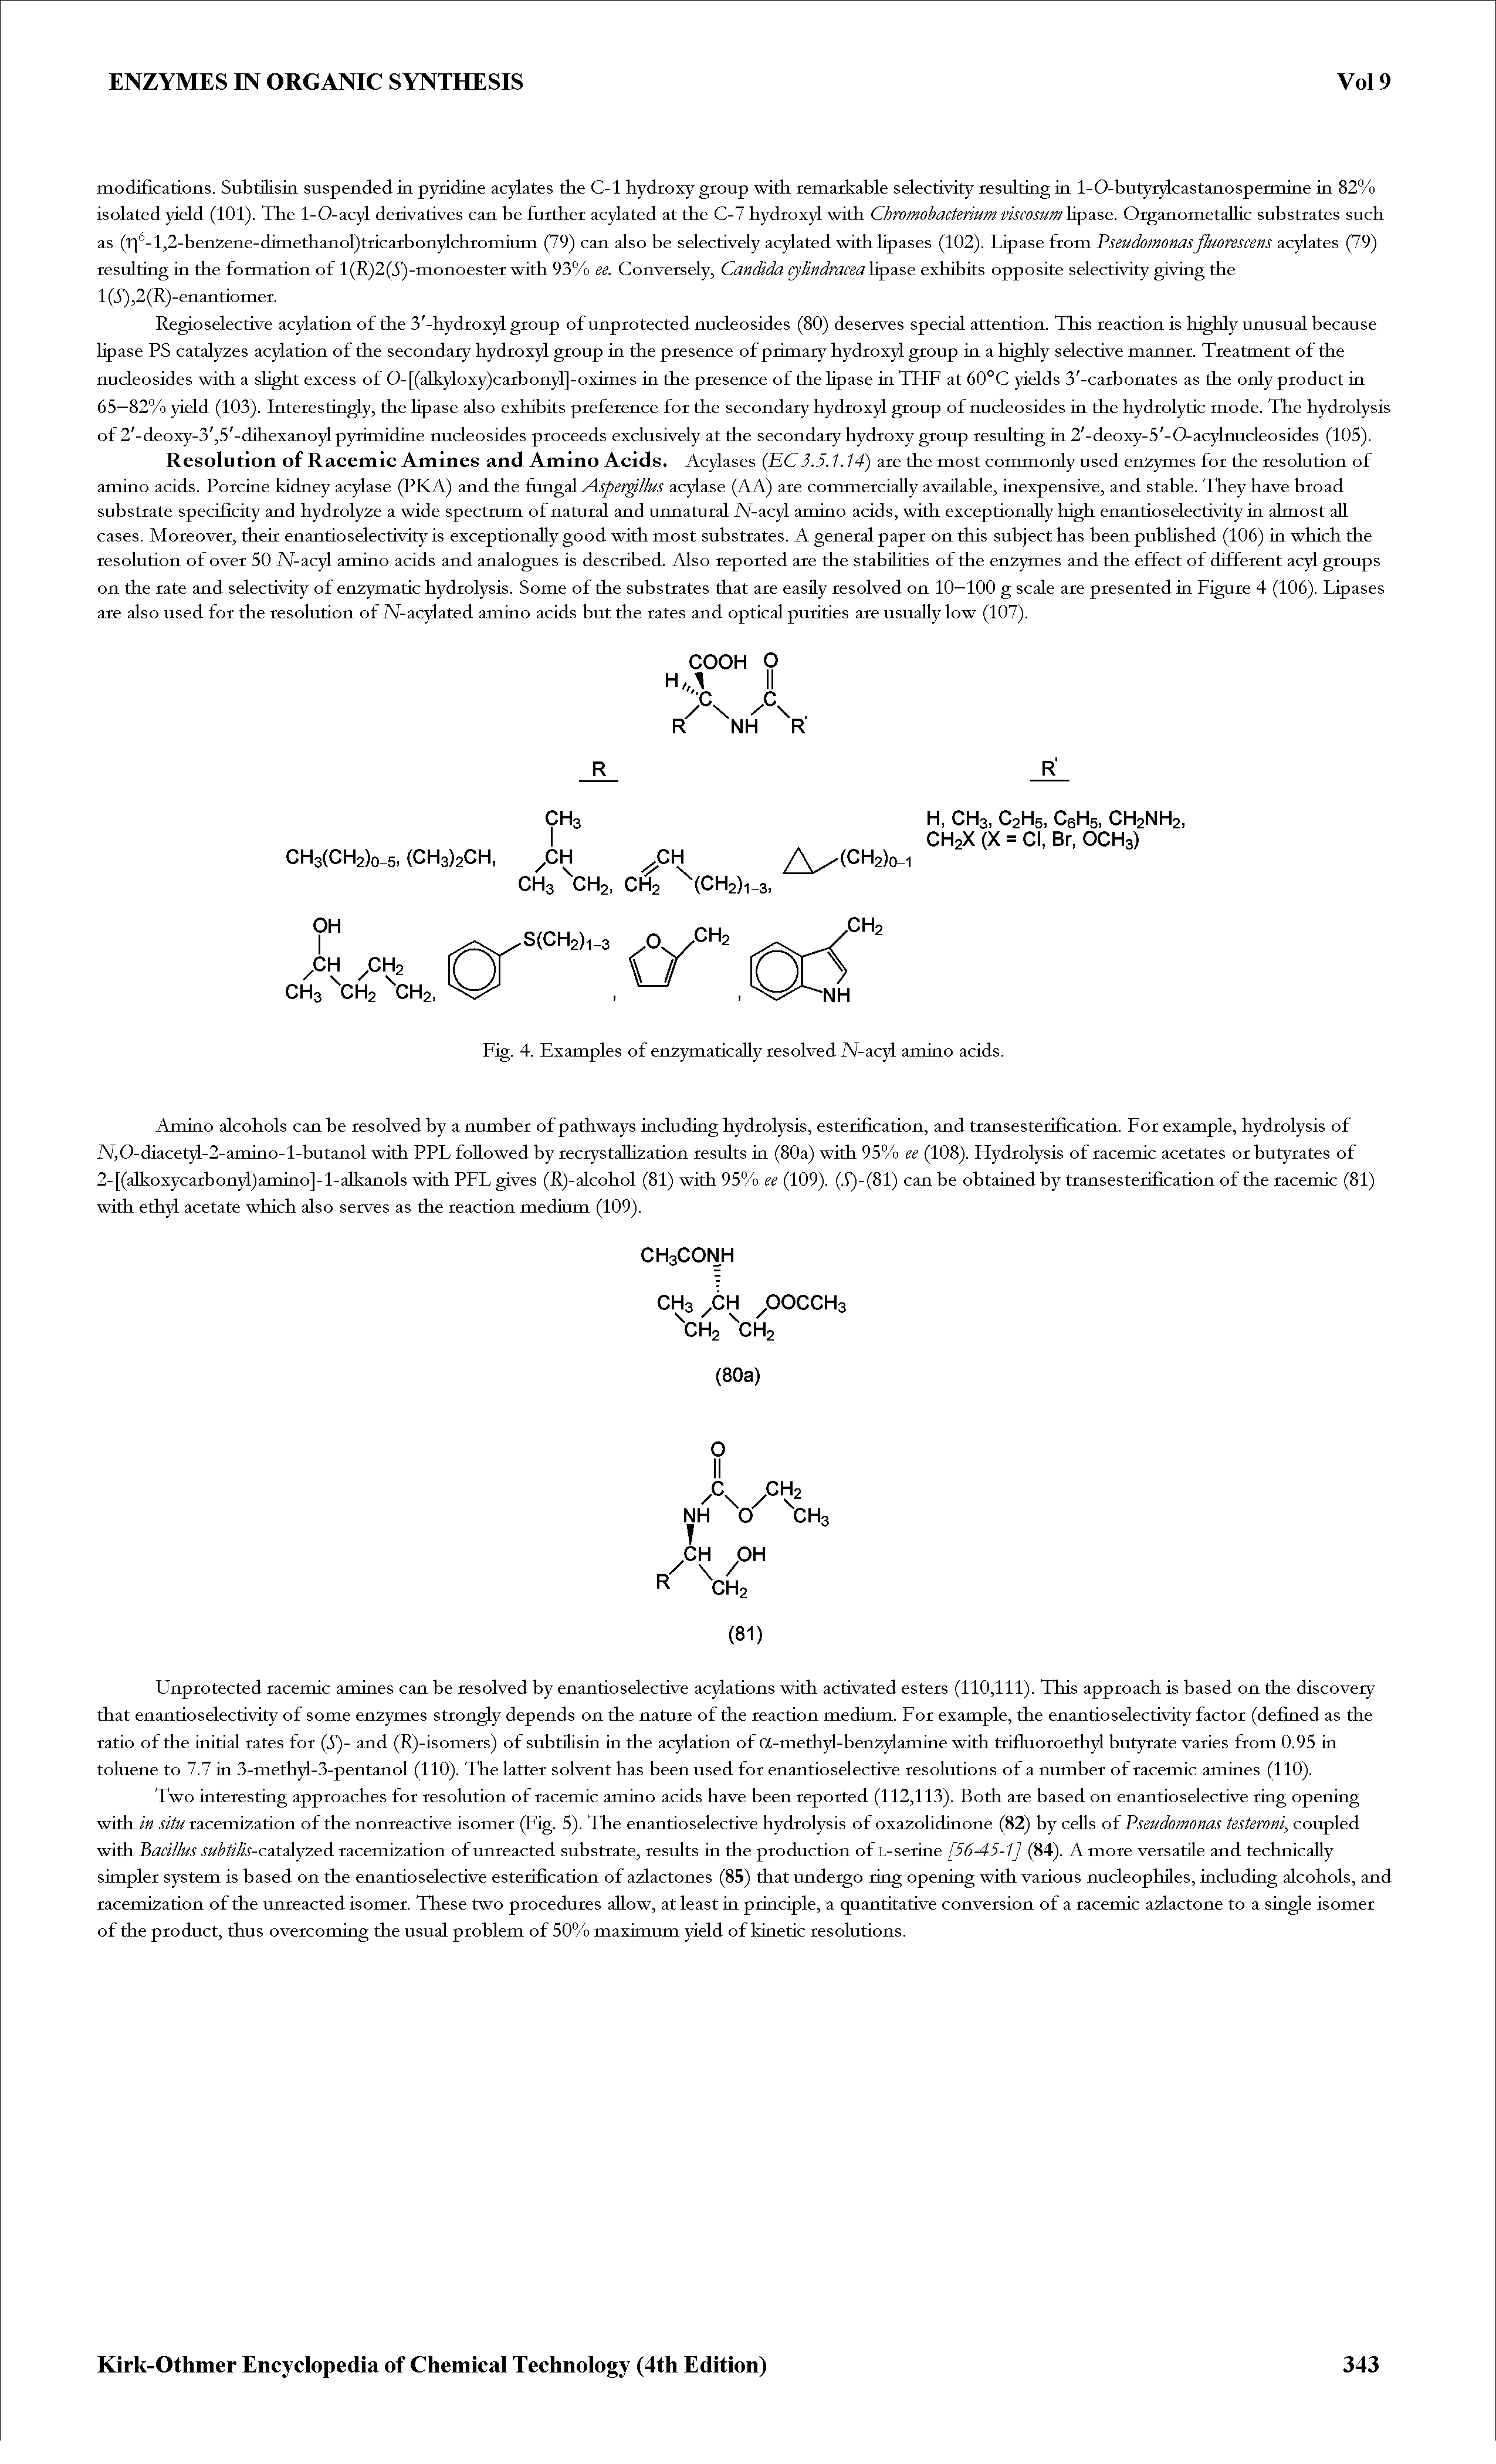 Fig. 4. Examples of enzymatically resolved A/-acyl amino acids.